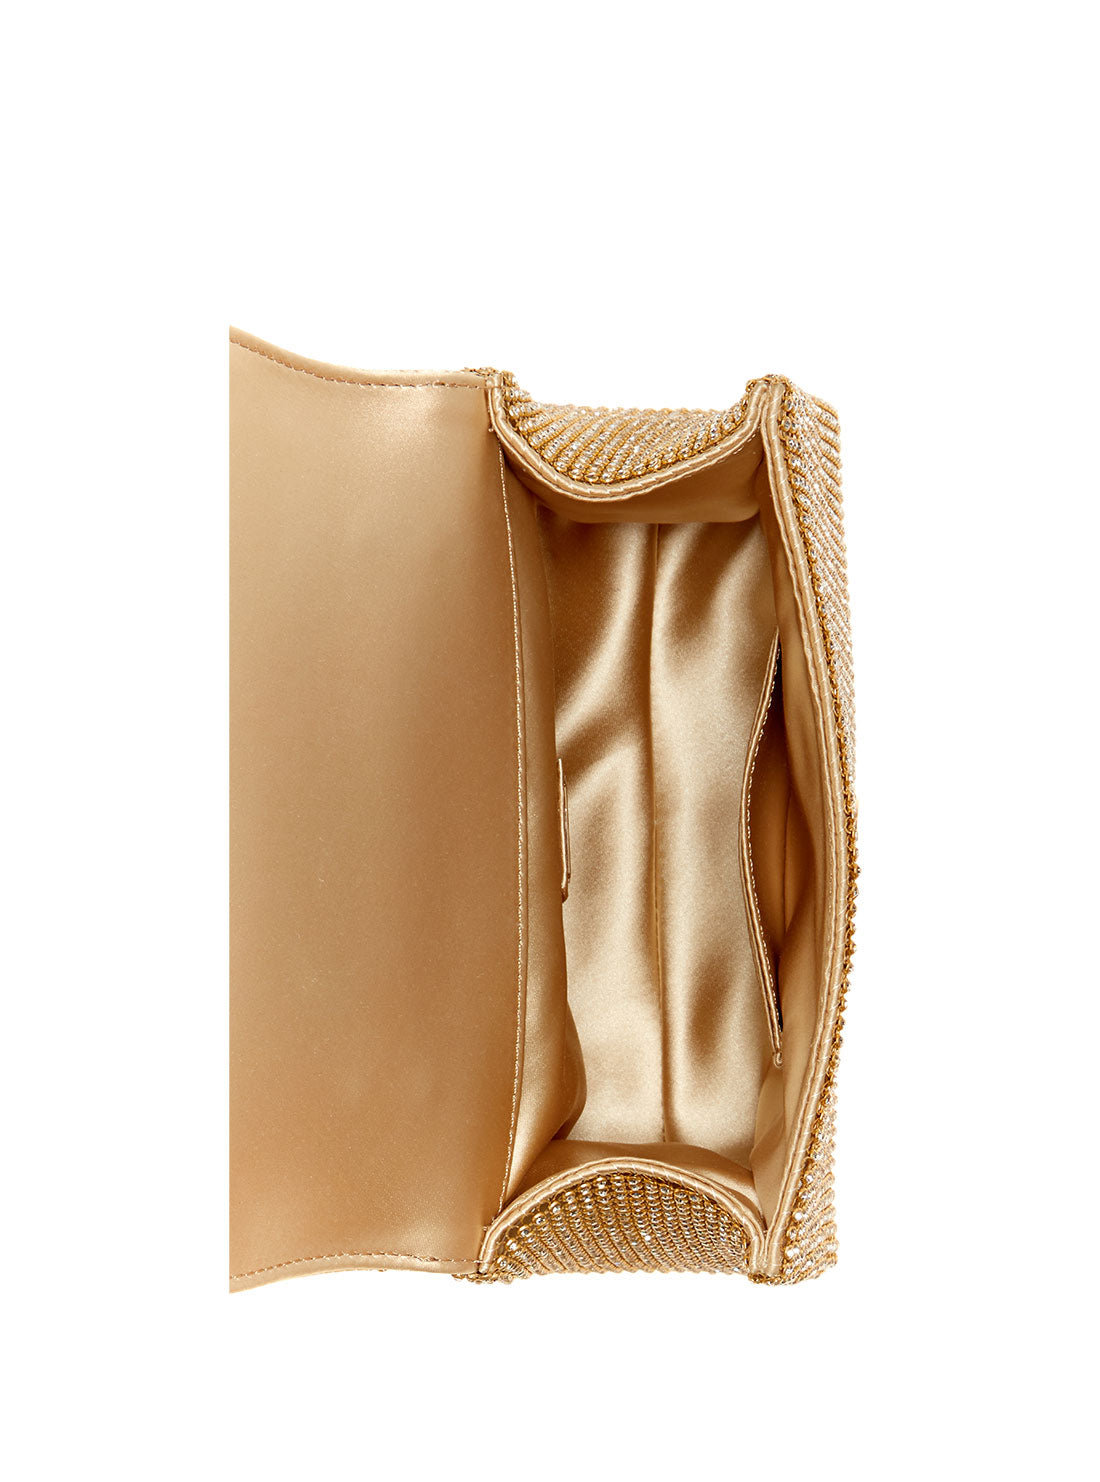 GUESS Gold Lua Top Handle Flap Bag inside view